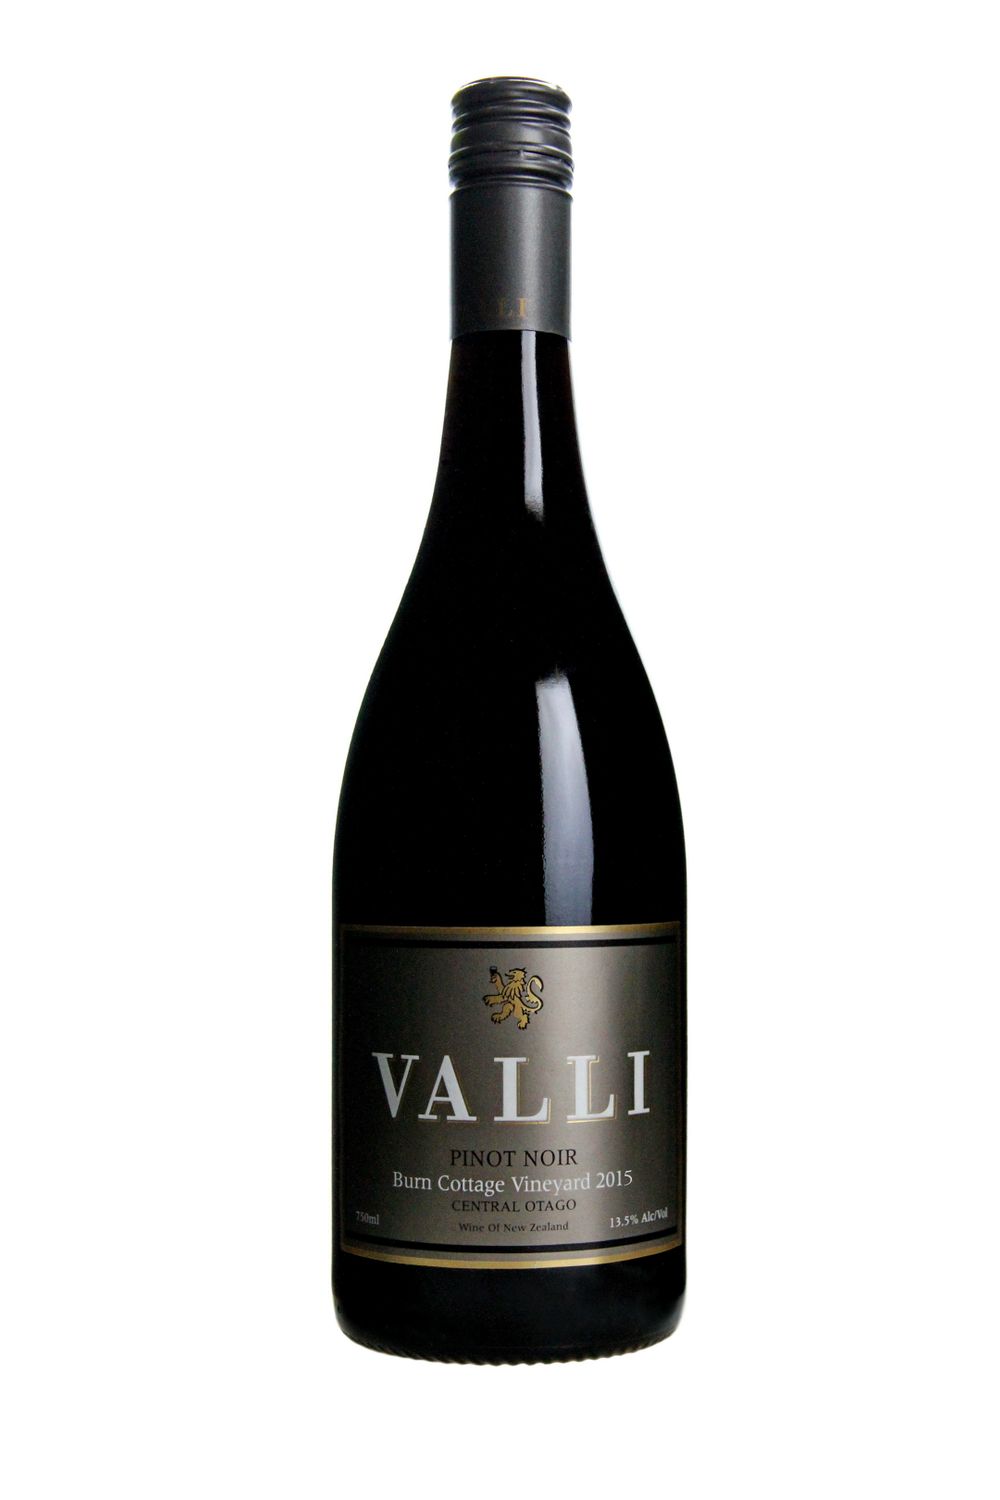 2015 Valli Burn Cottage Vineyard Pinot Noir